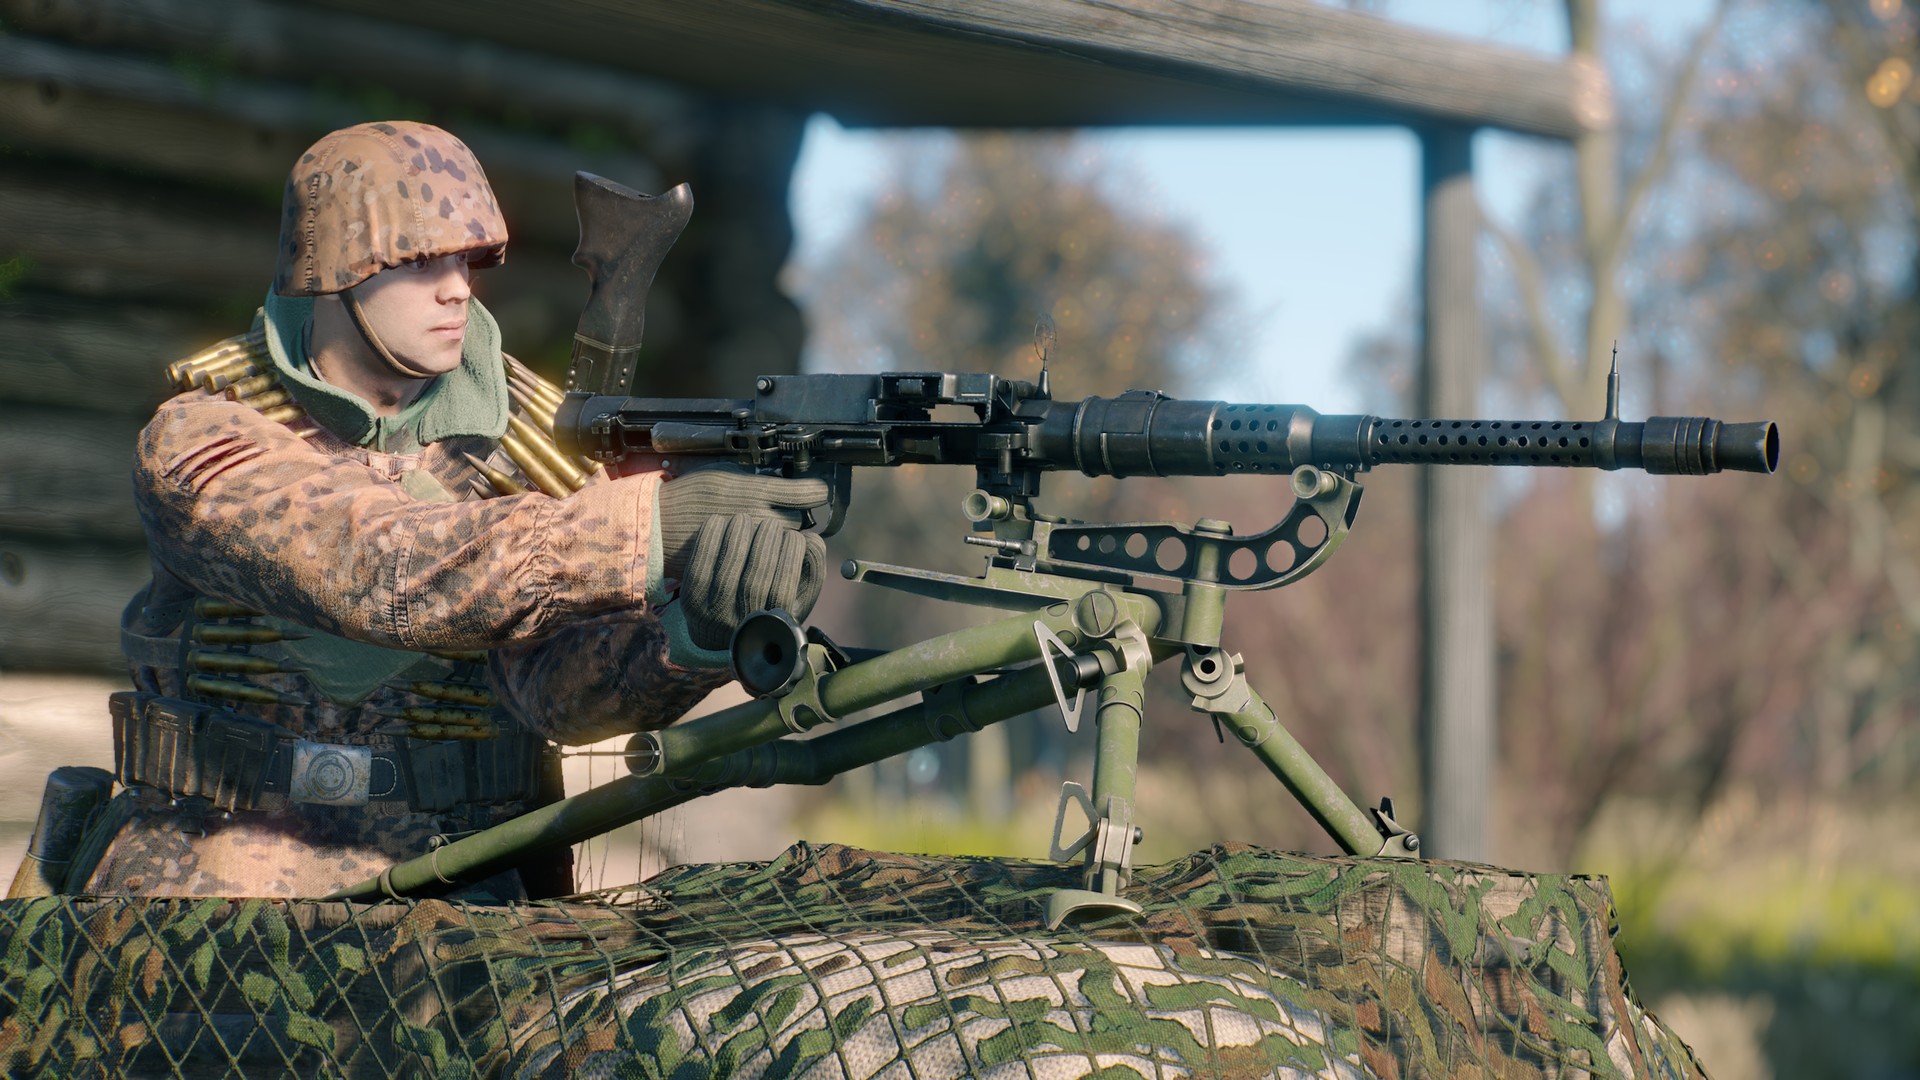 Best MG42 Warzone loadout: Class setup, Attachments, Perks - Dexerto